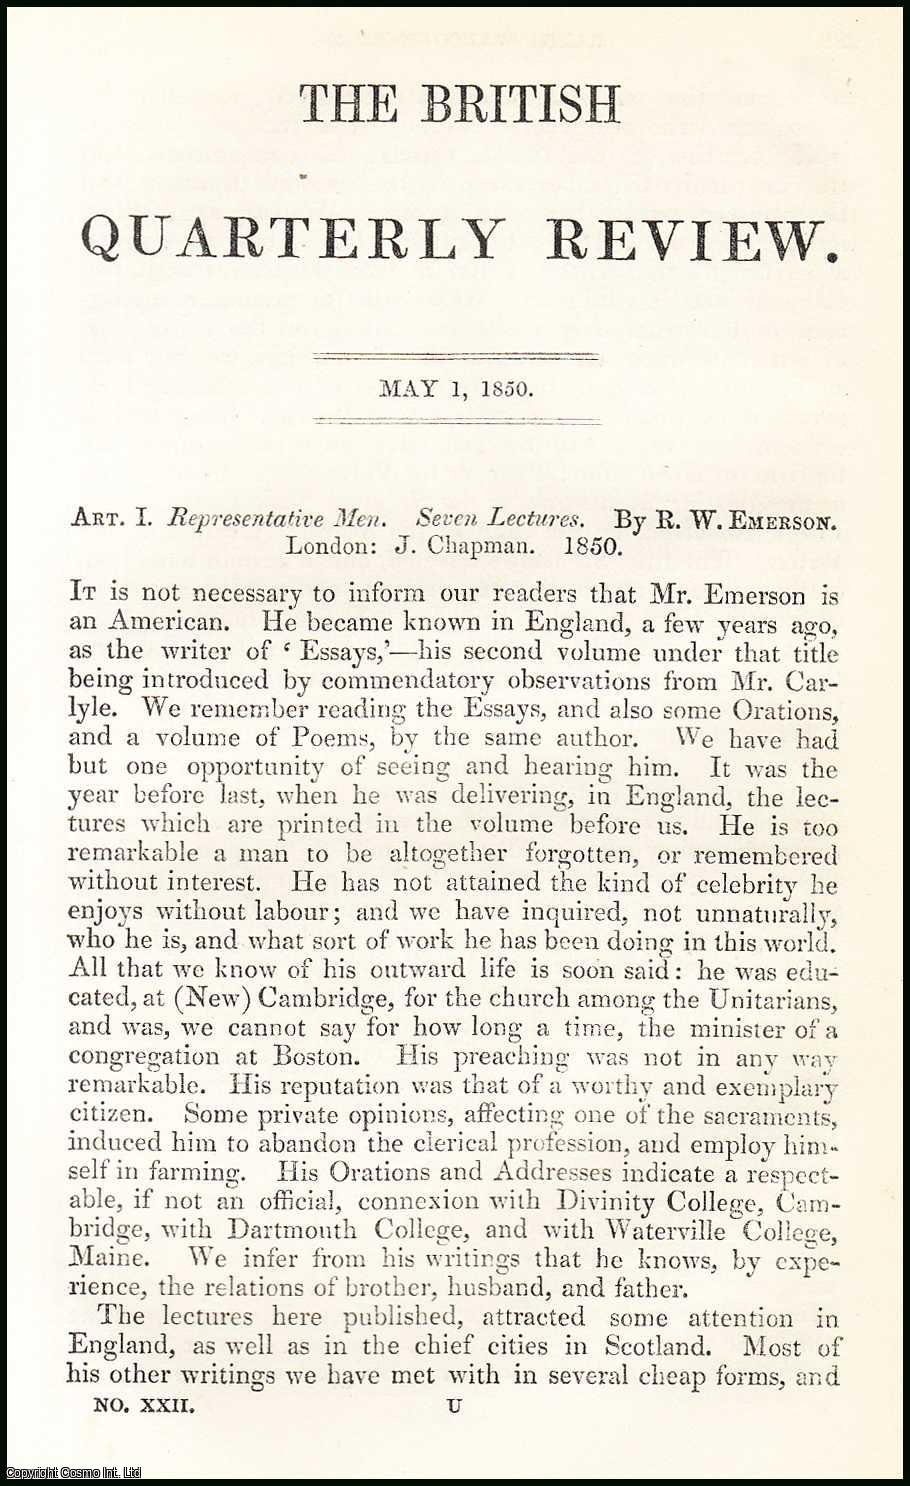 Robert Vaughan - Ralph Waldo Emerson, American essayist. A rare original article from the British Quarterly Review, 1850.